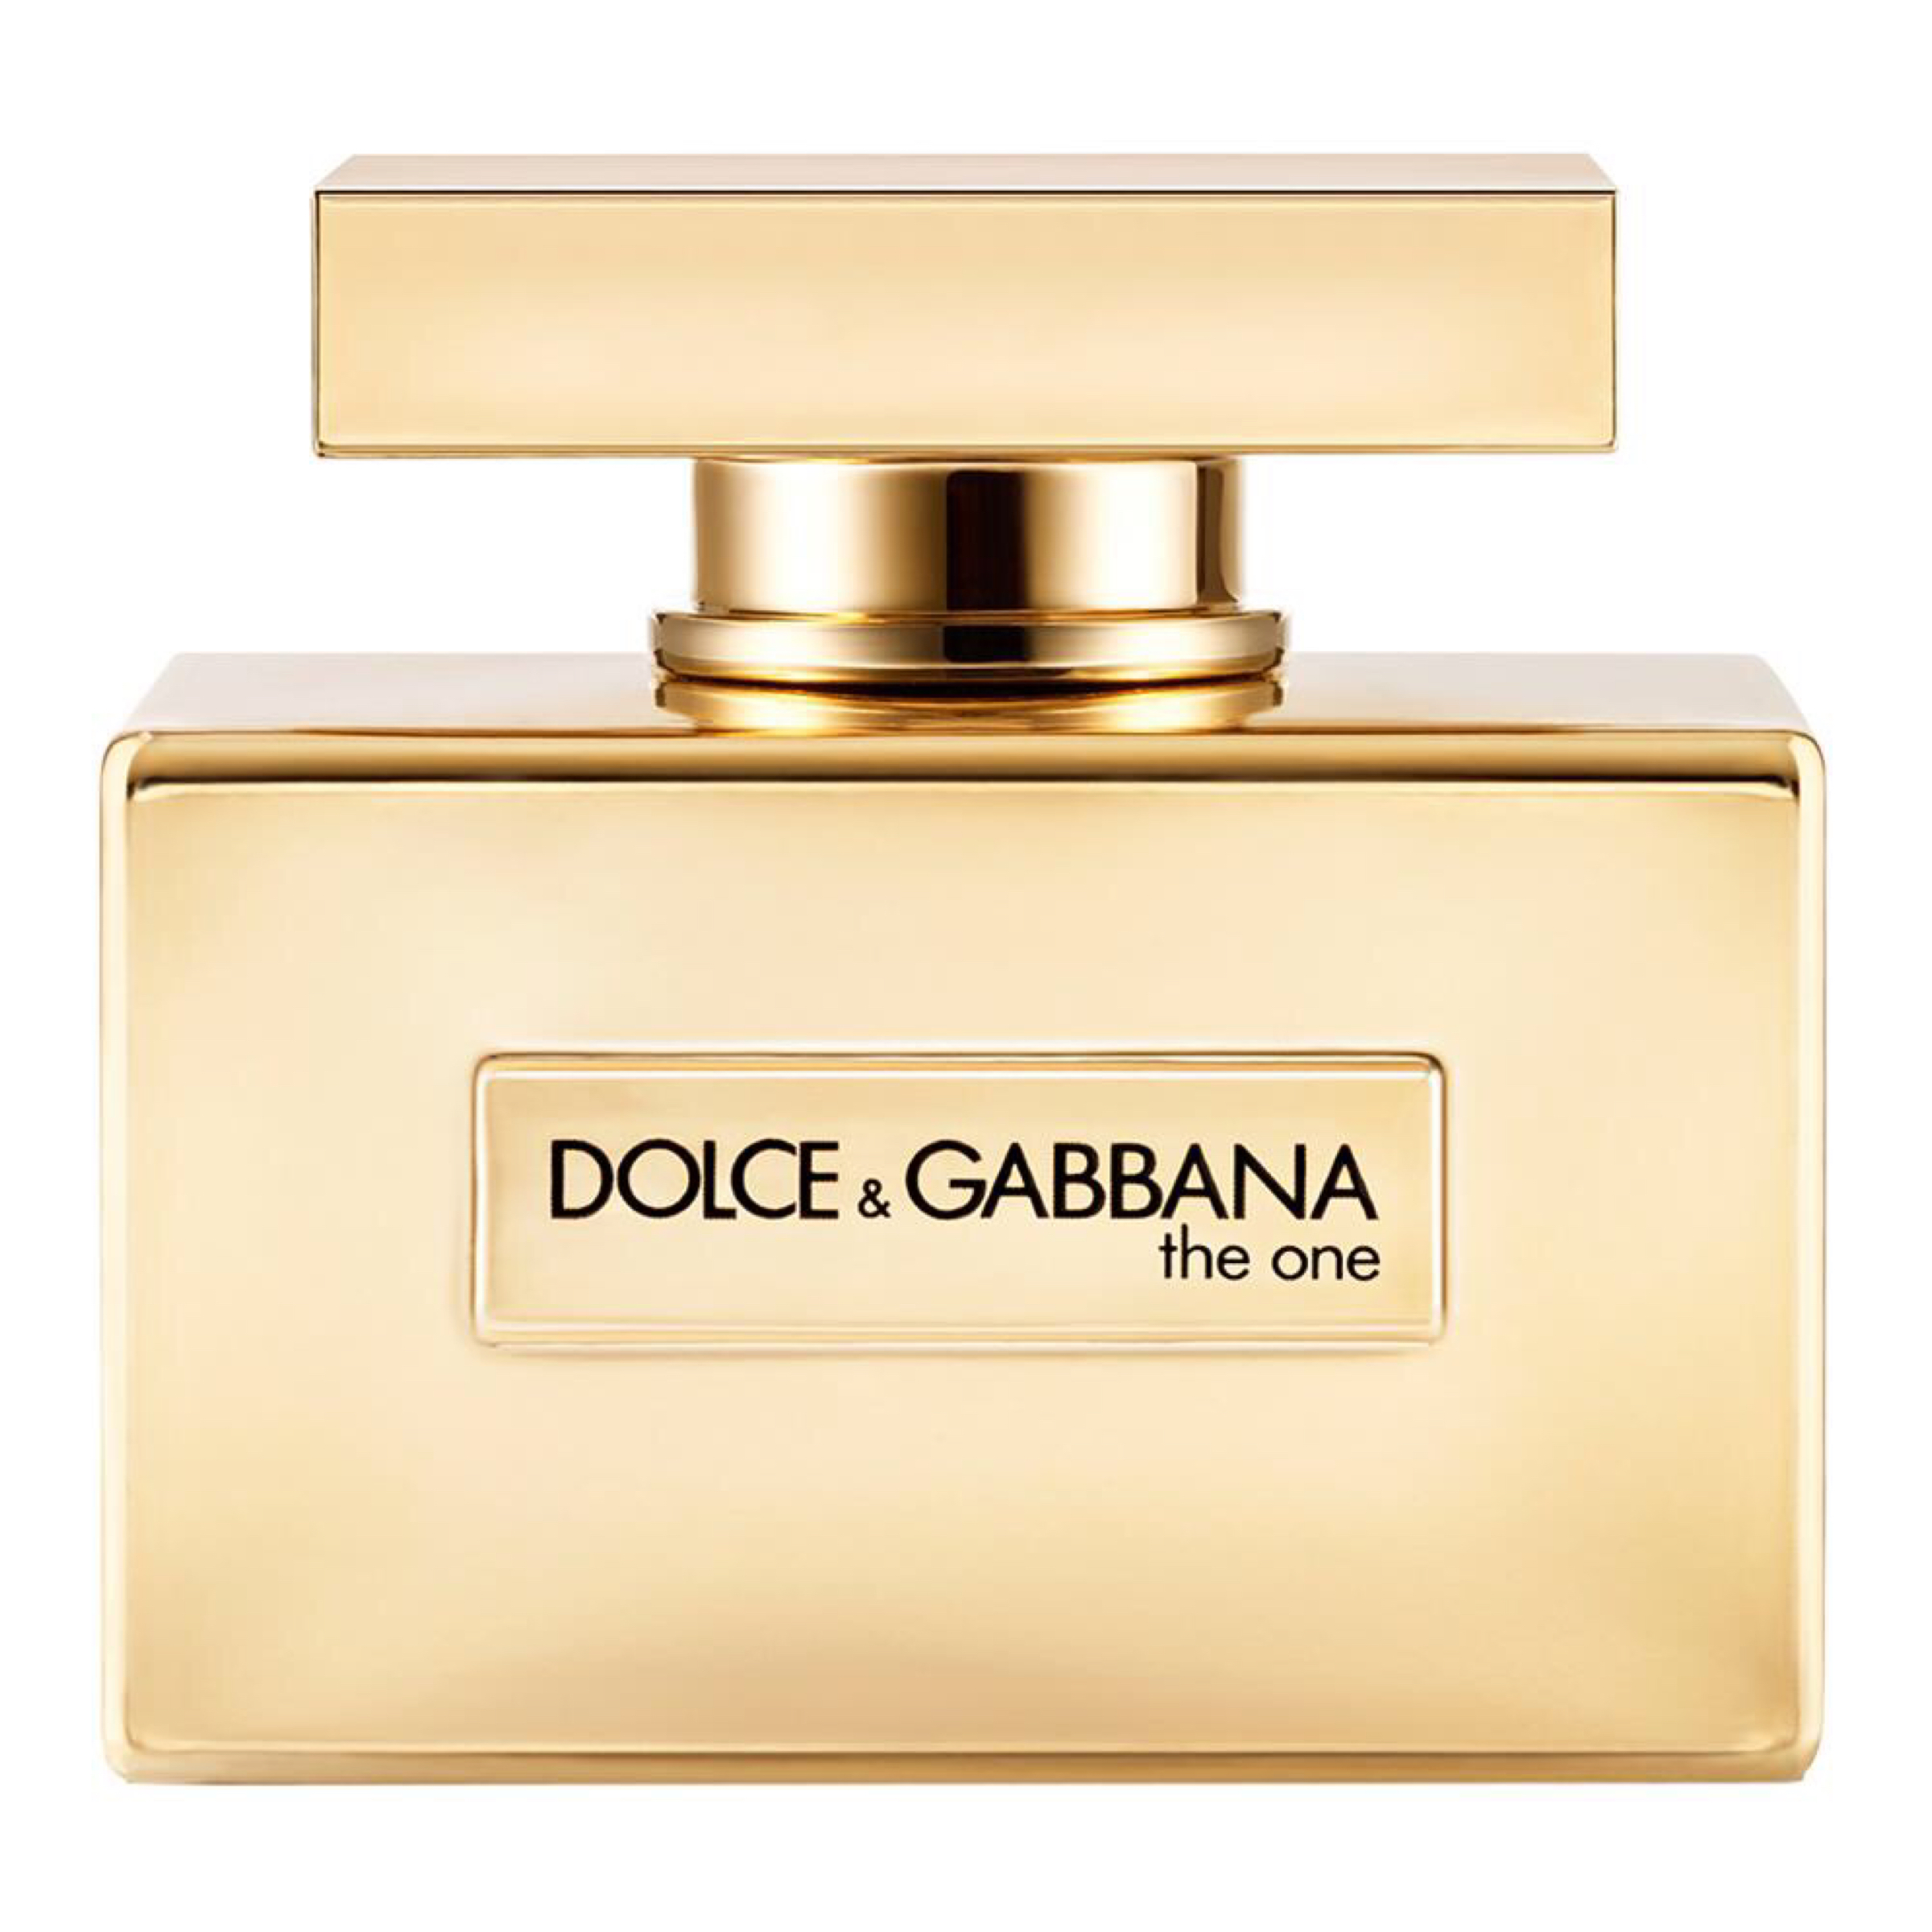 Dolce gabbana d. Dolce Gabbana the one Gold intense. Dolce Gabbana the one Gold Limited Edition. Dolce Gabbana the one Gold intense женские. Дольче Габбана the one Gold intense.